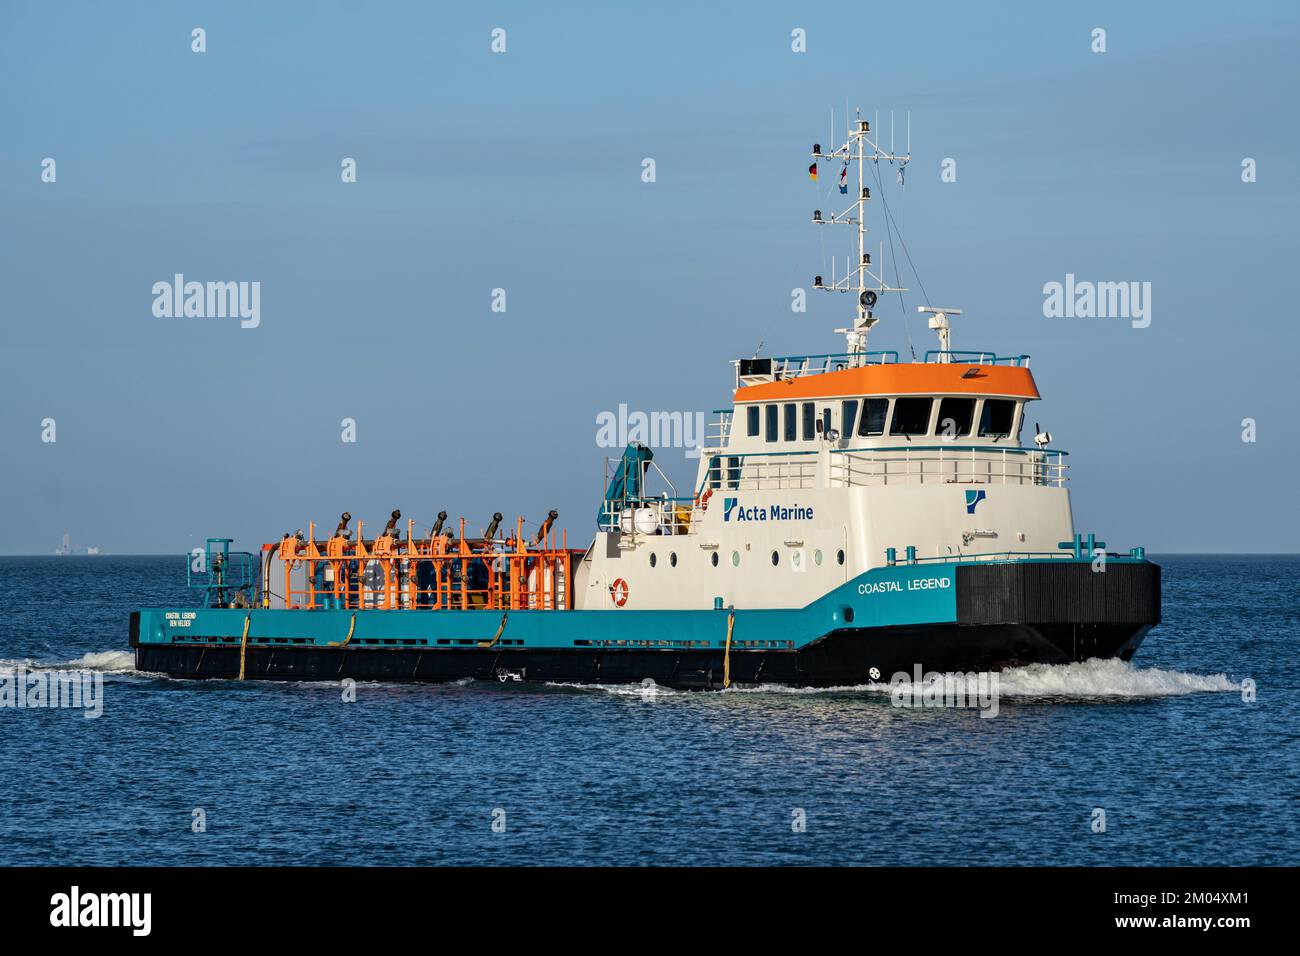 Acta Marine offshore service supply vessel COASTAL LEGEND on the river Elbe Stock Photo